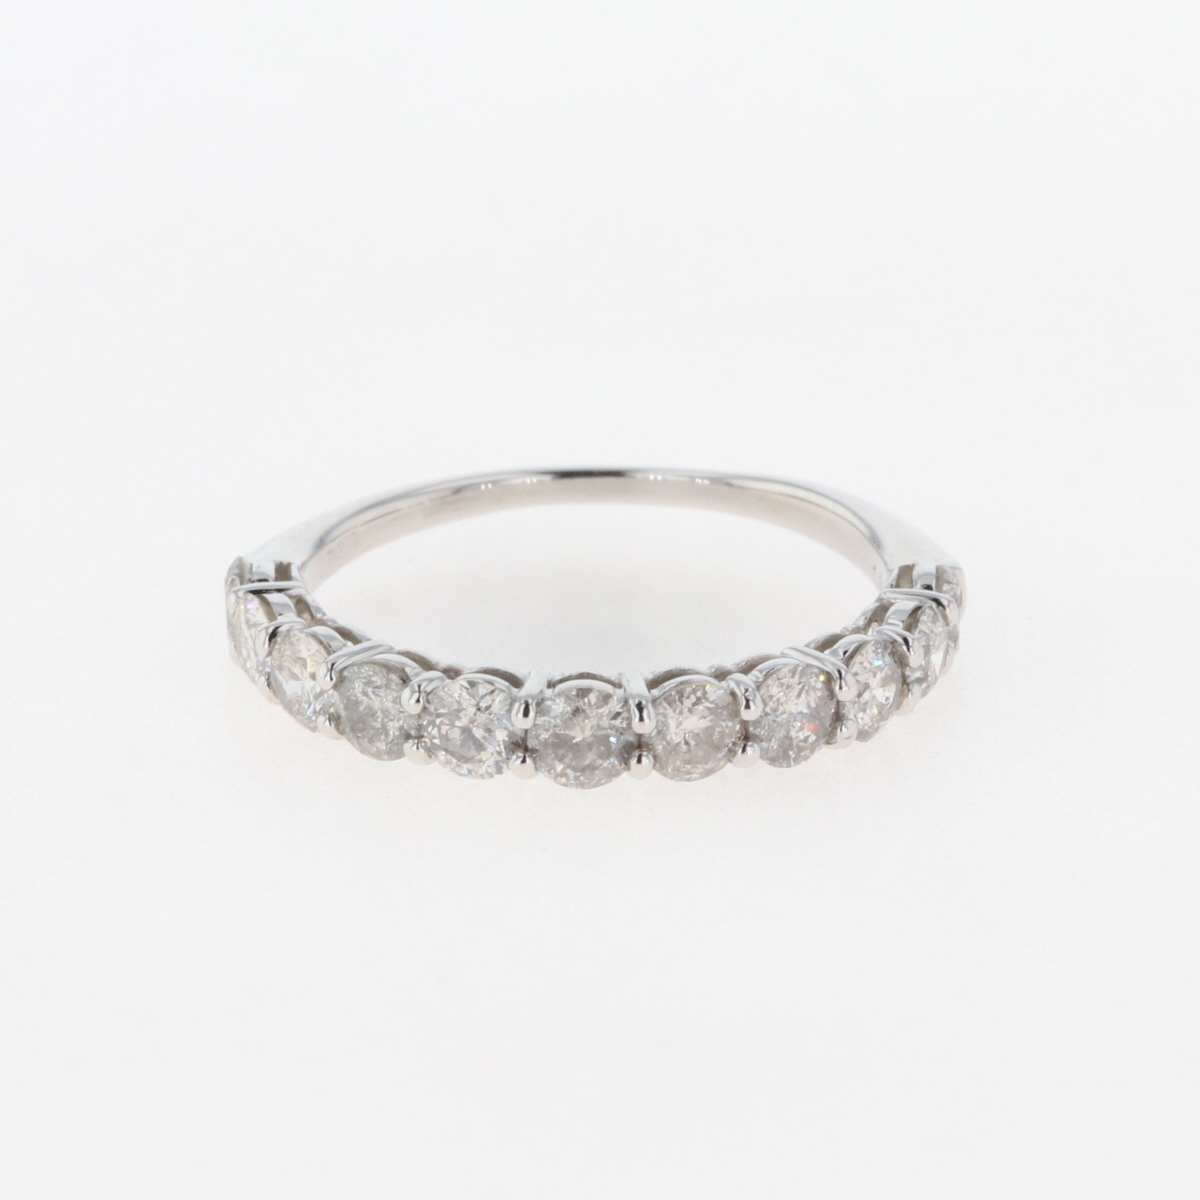 24%OFF 【ラッピング可】 メレダイヤ デザインリング プラチナ 指輪